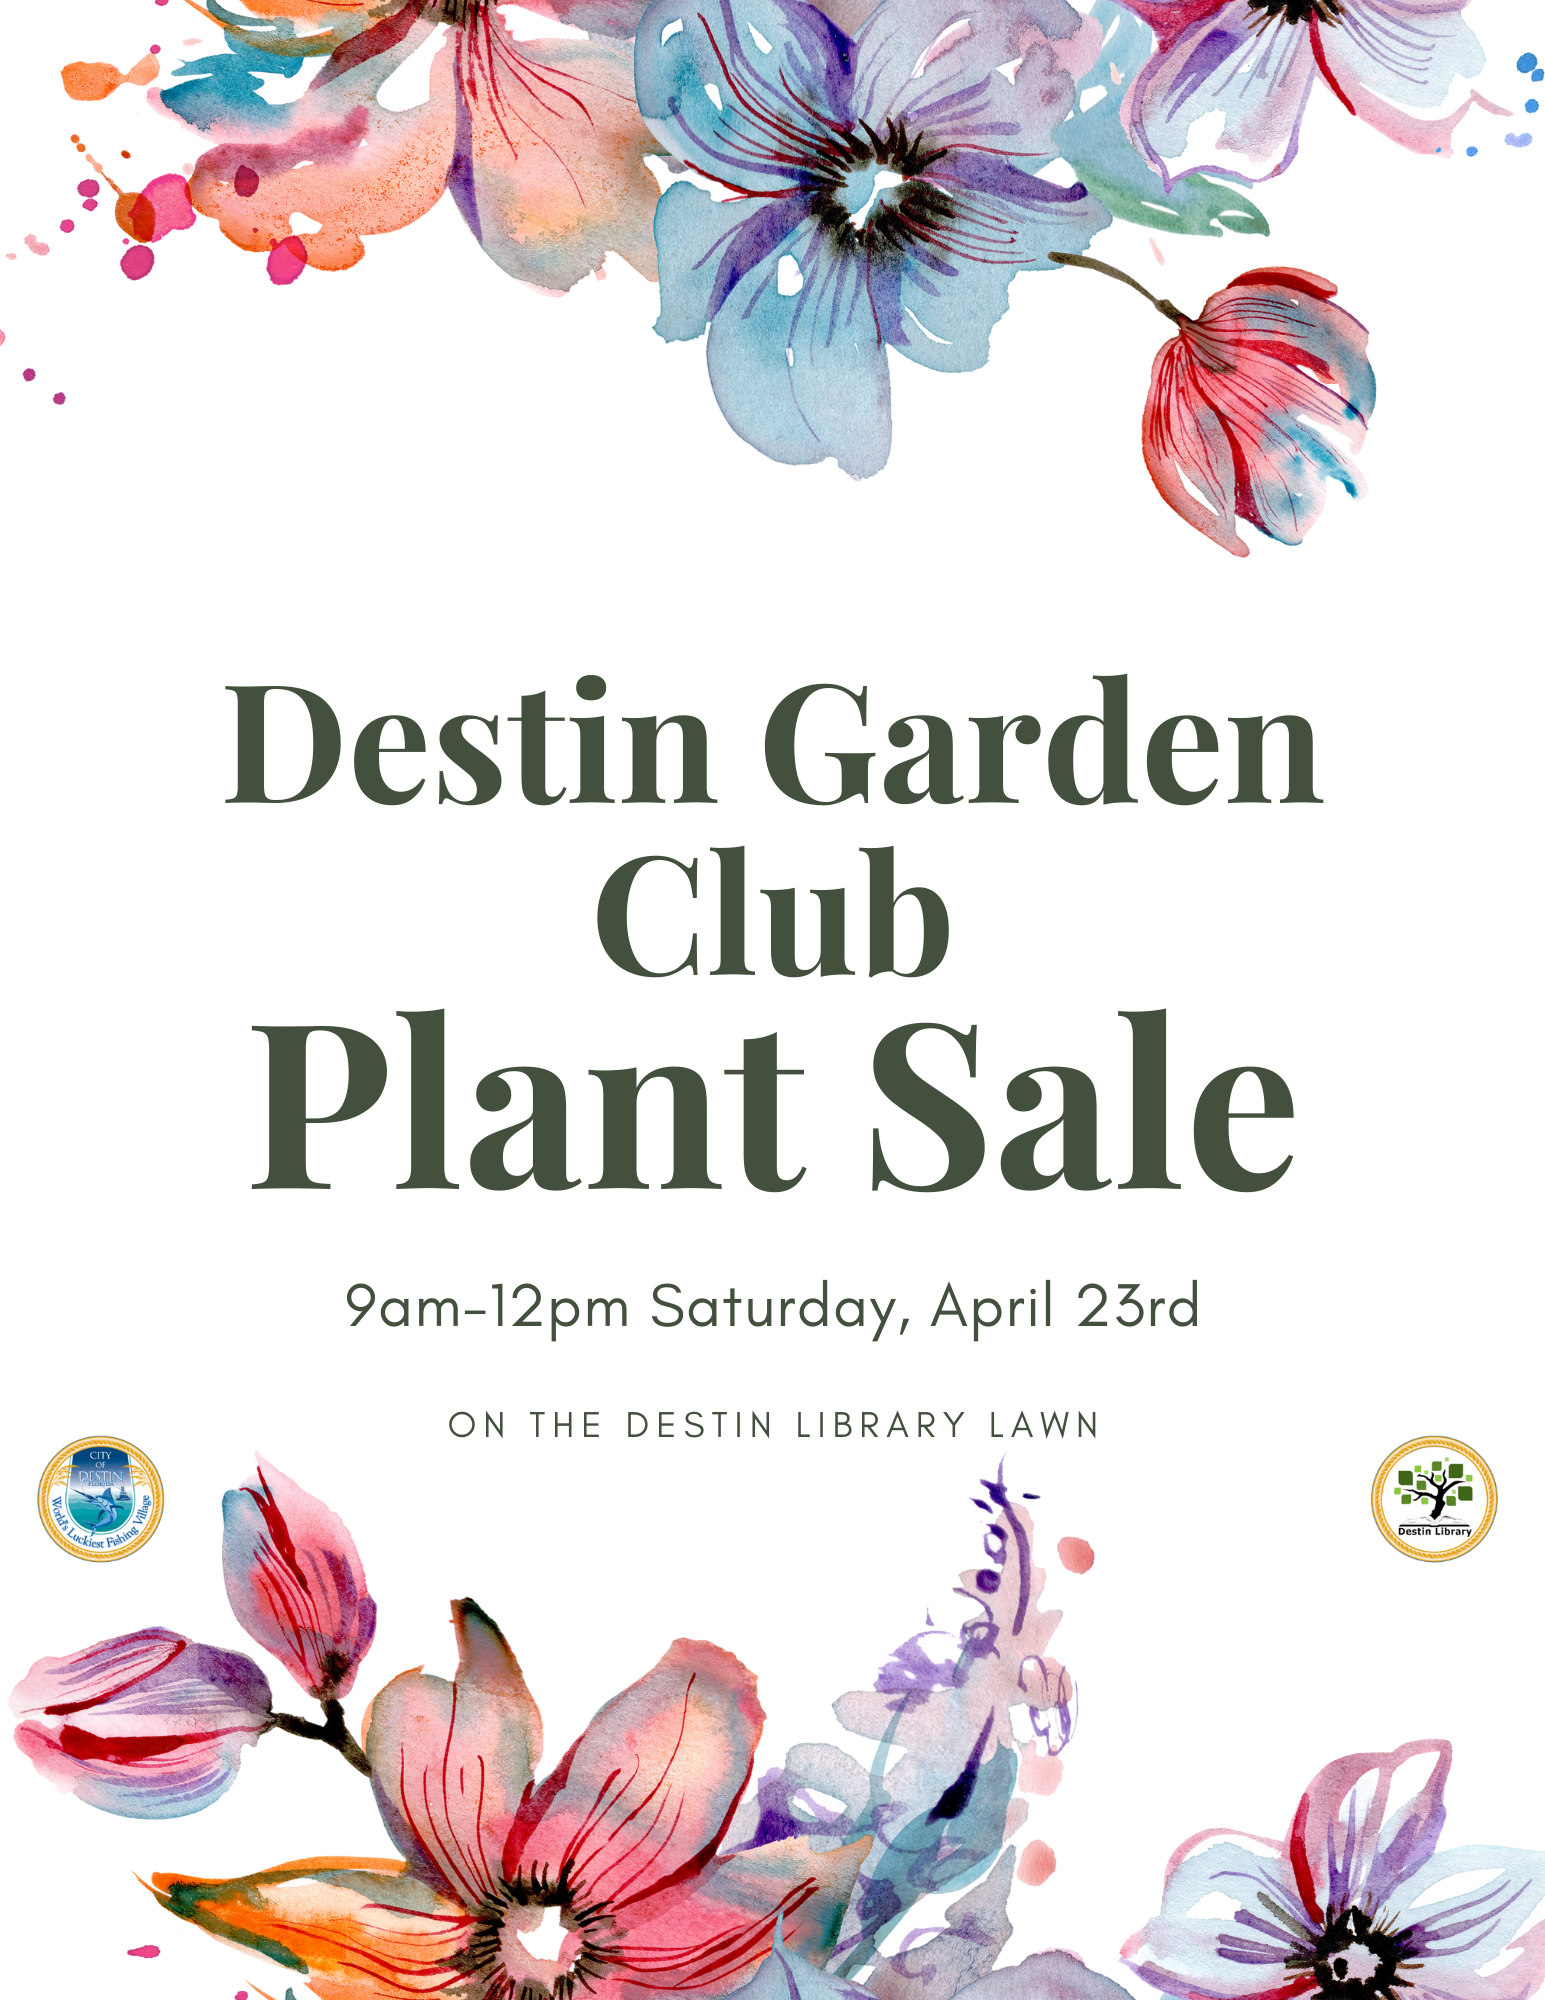 Destin Garden Club Annual Plant Sale